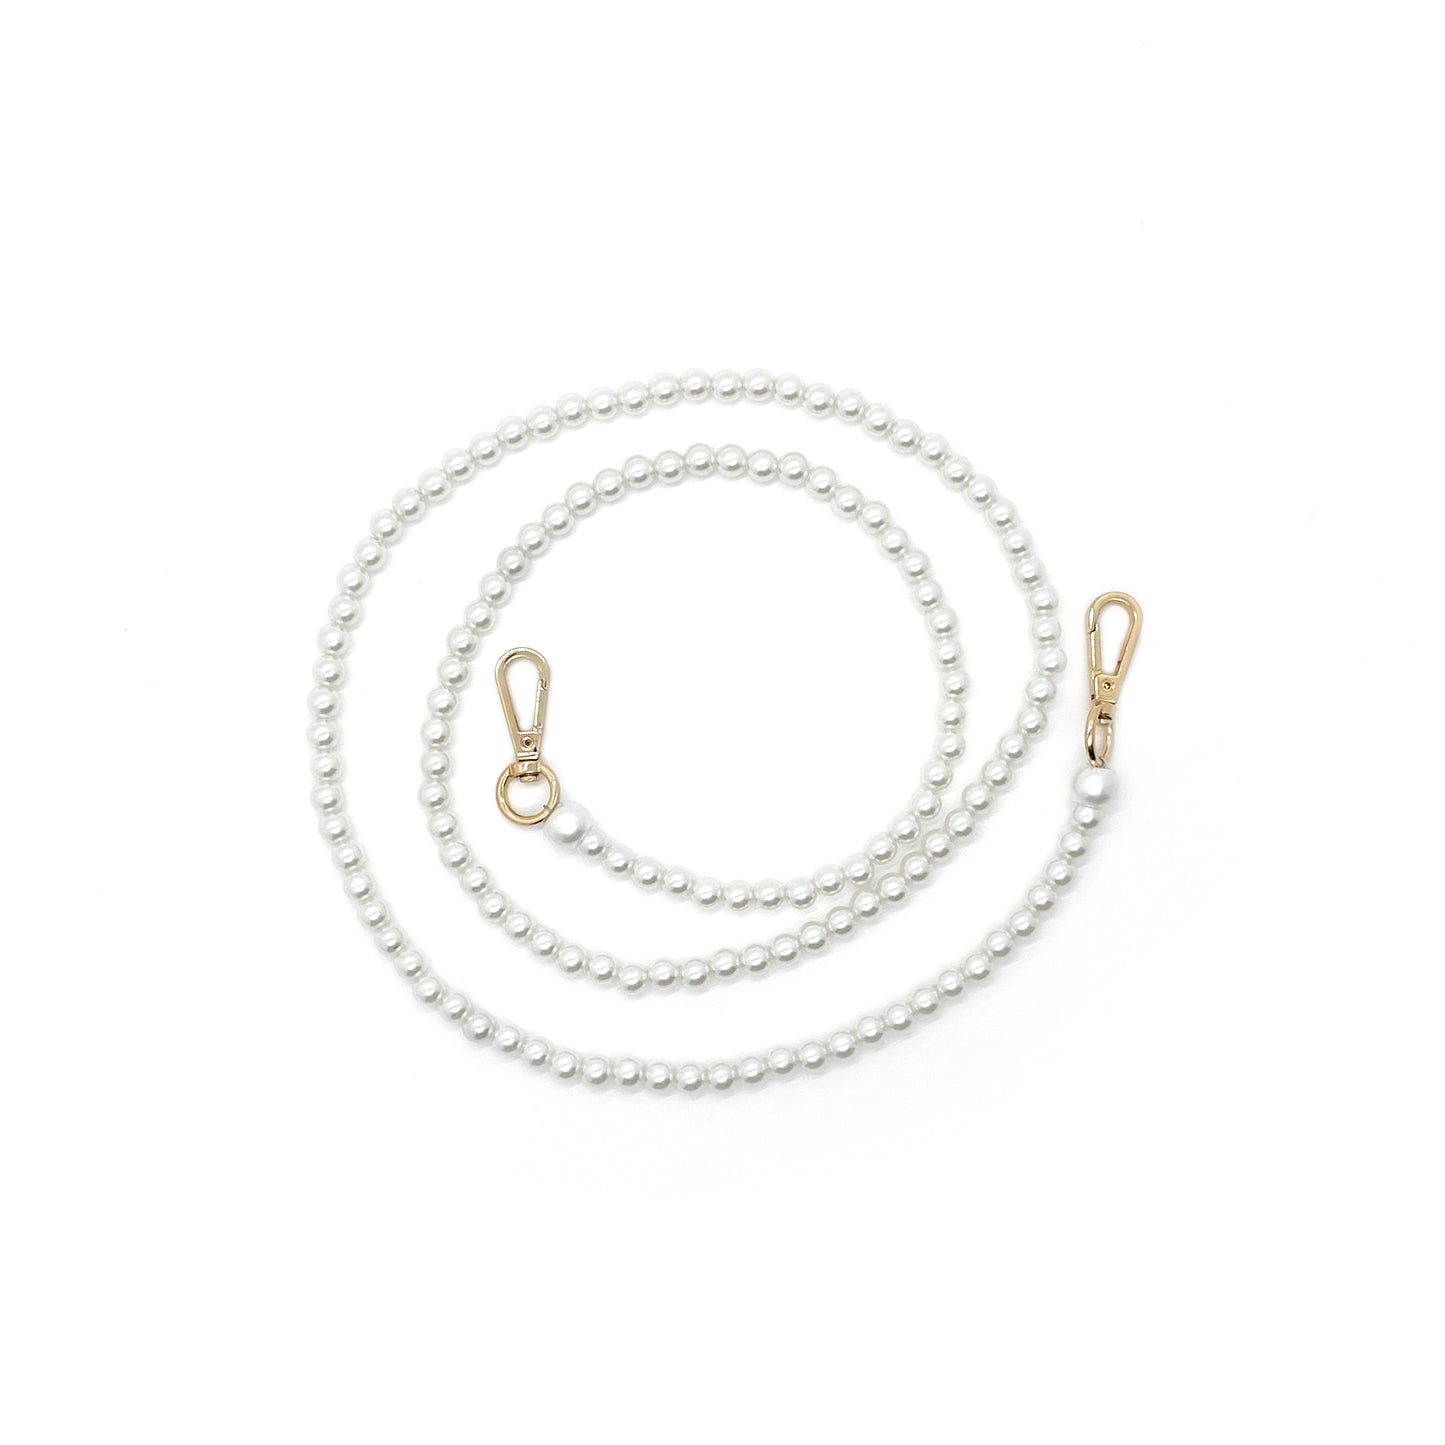 Pearl strap - 110cm (crossbody strap length) - small pearls